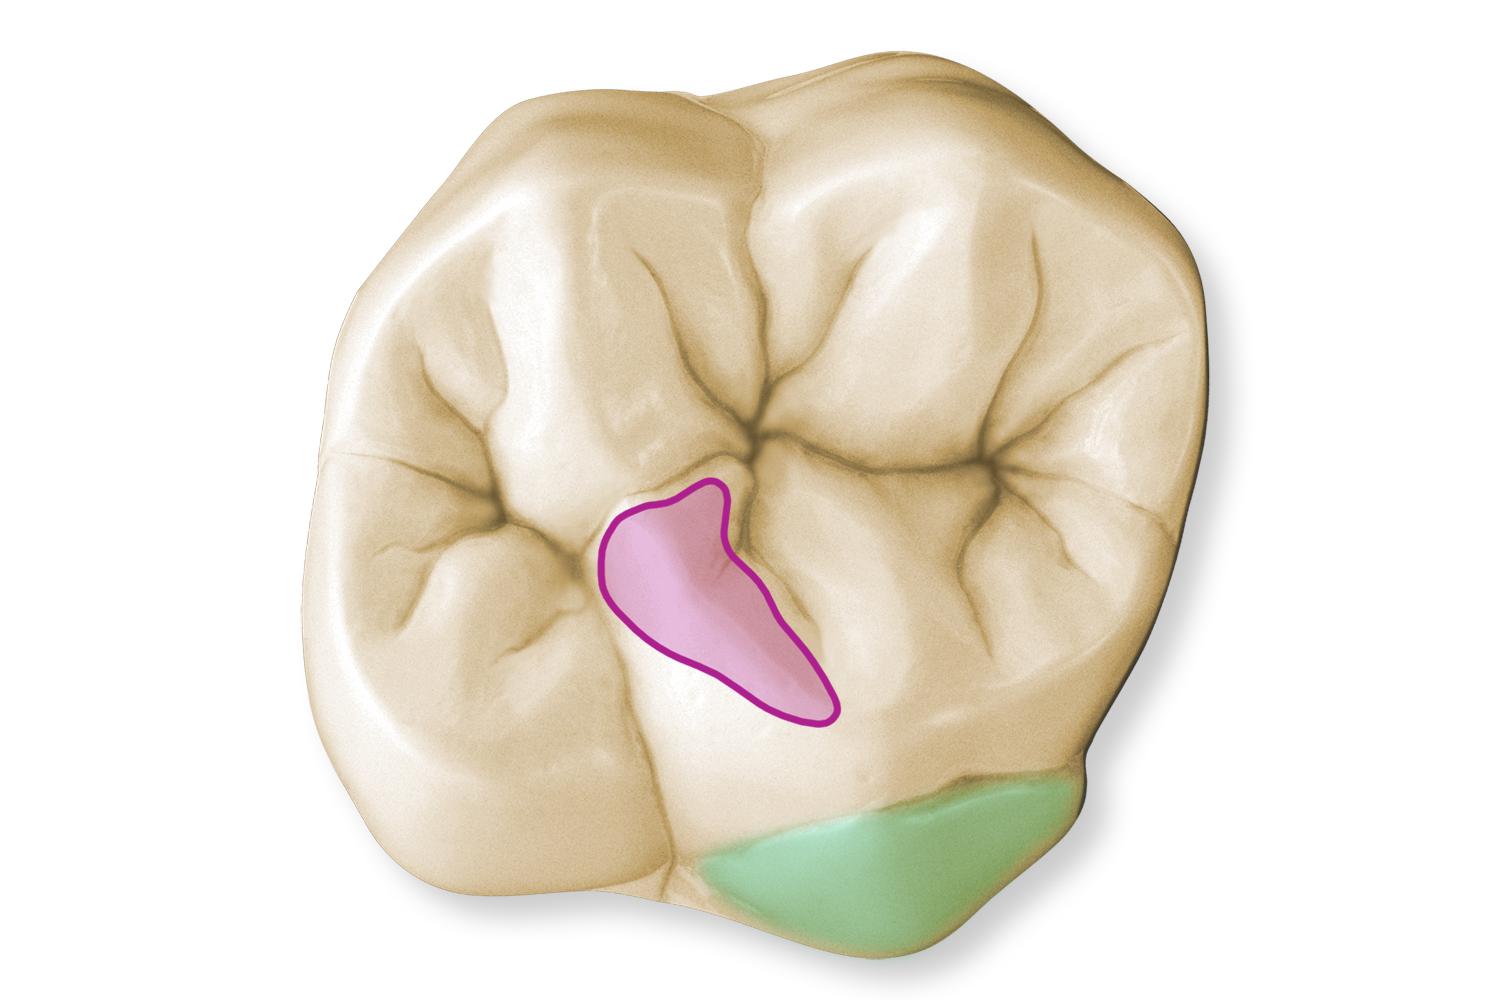 Dental Anatomy